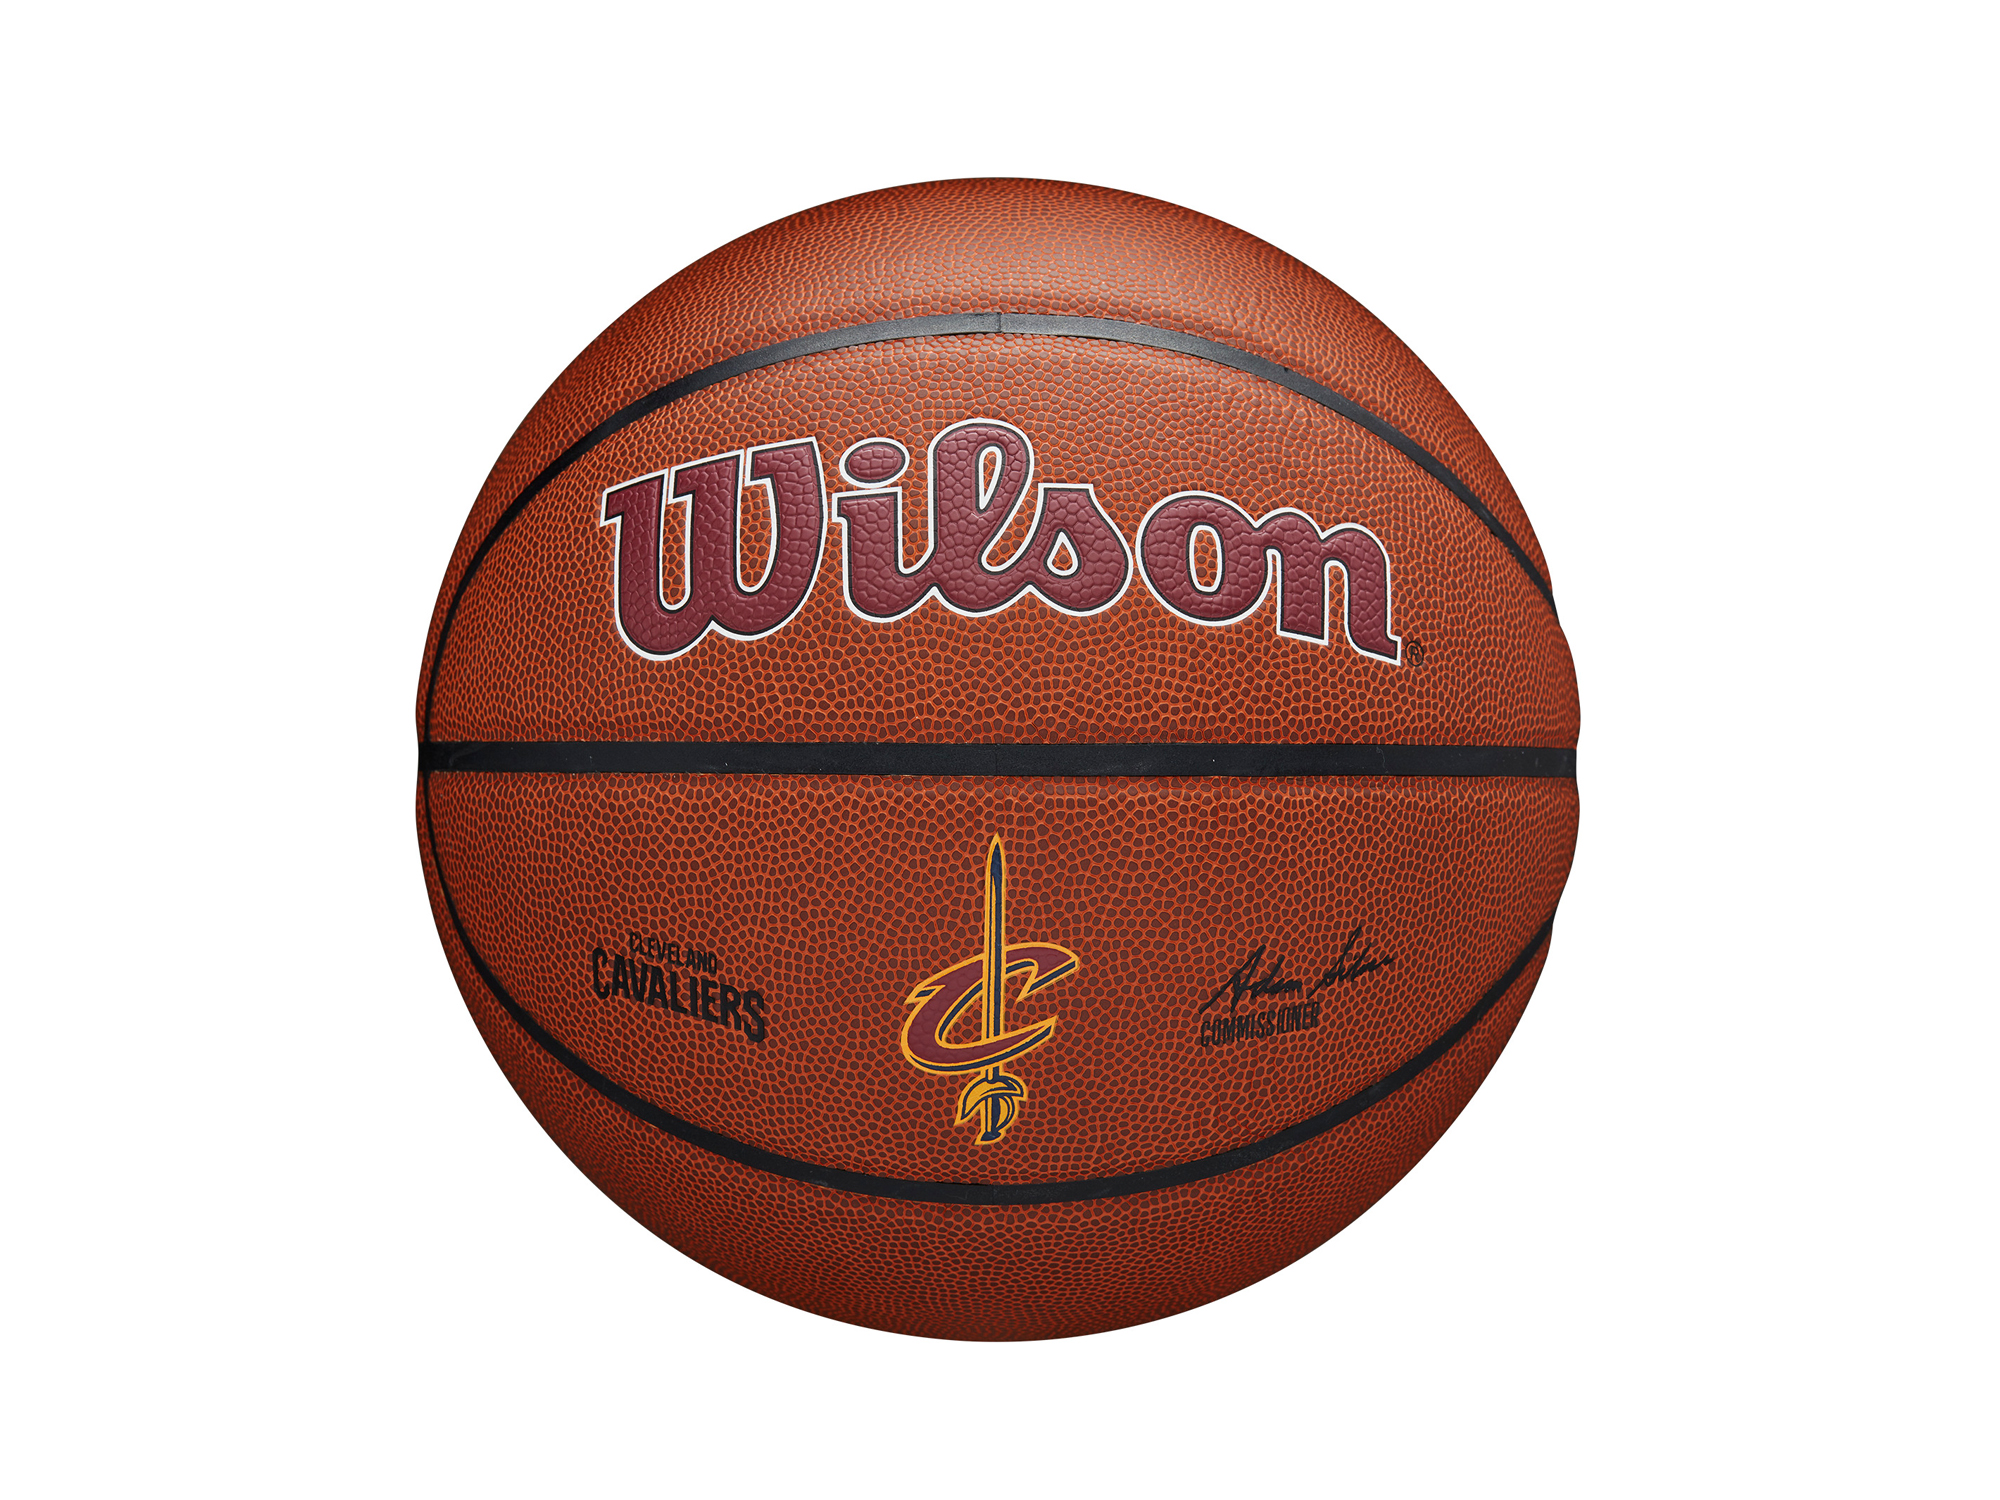 Wilson Cleveland Cavaliers NBA Team Alliance Basketball